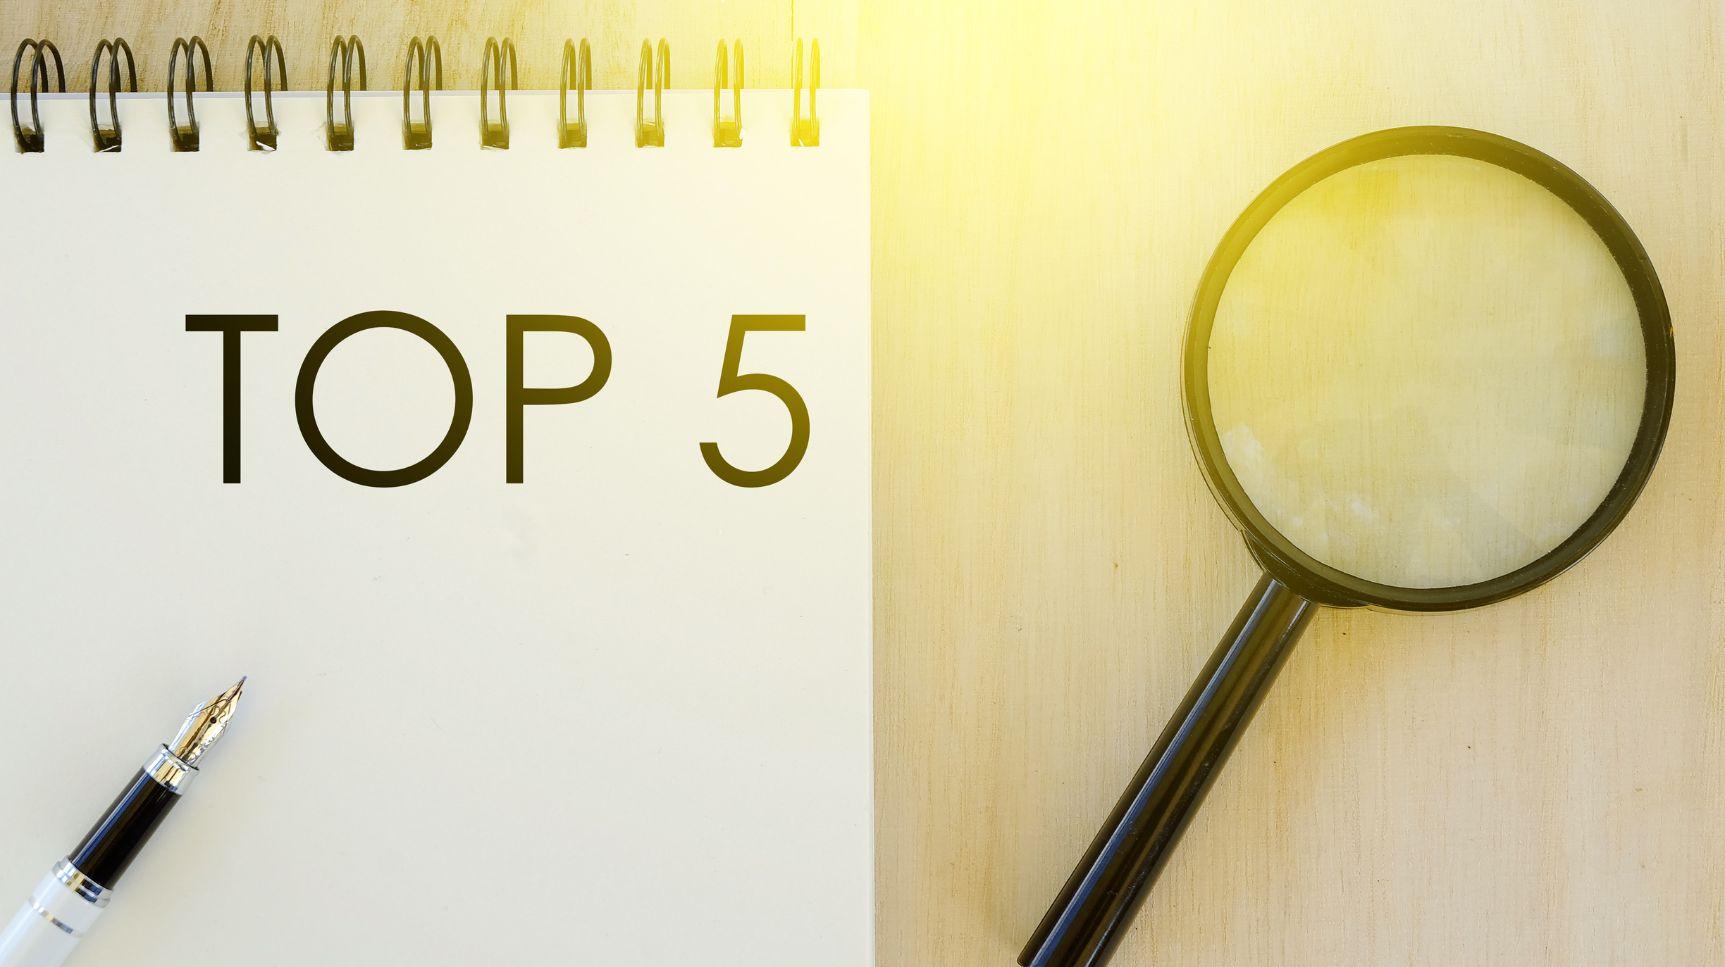 TOP 5 funkcji w systemach CRM dla firm – RANKING 2020